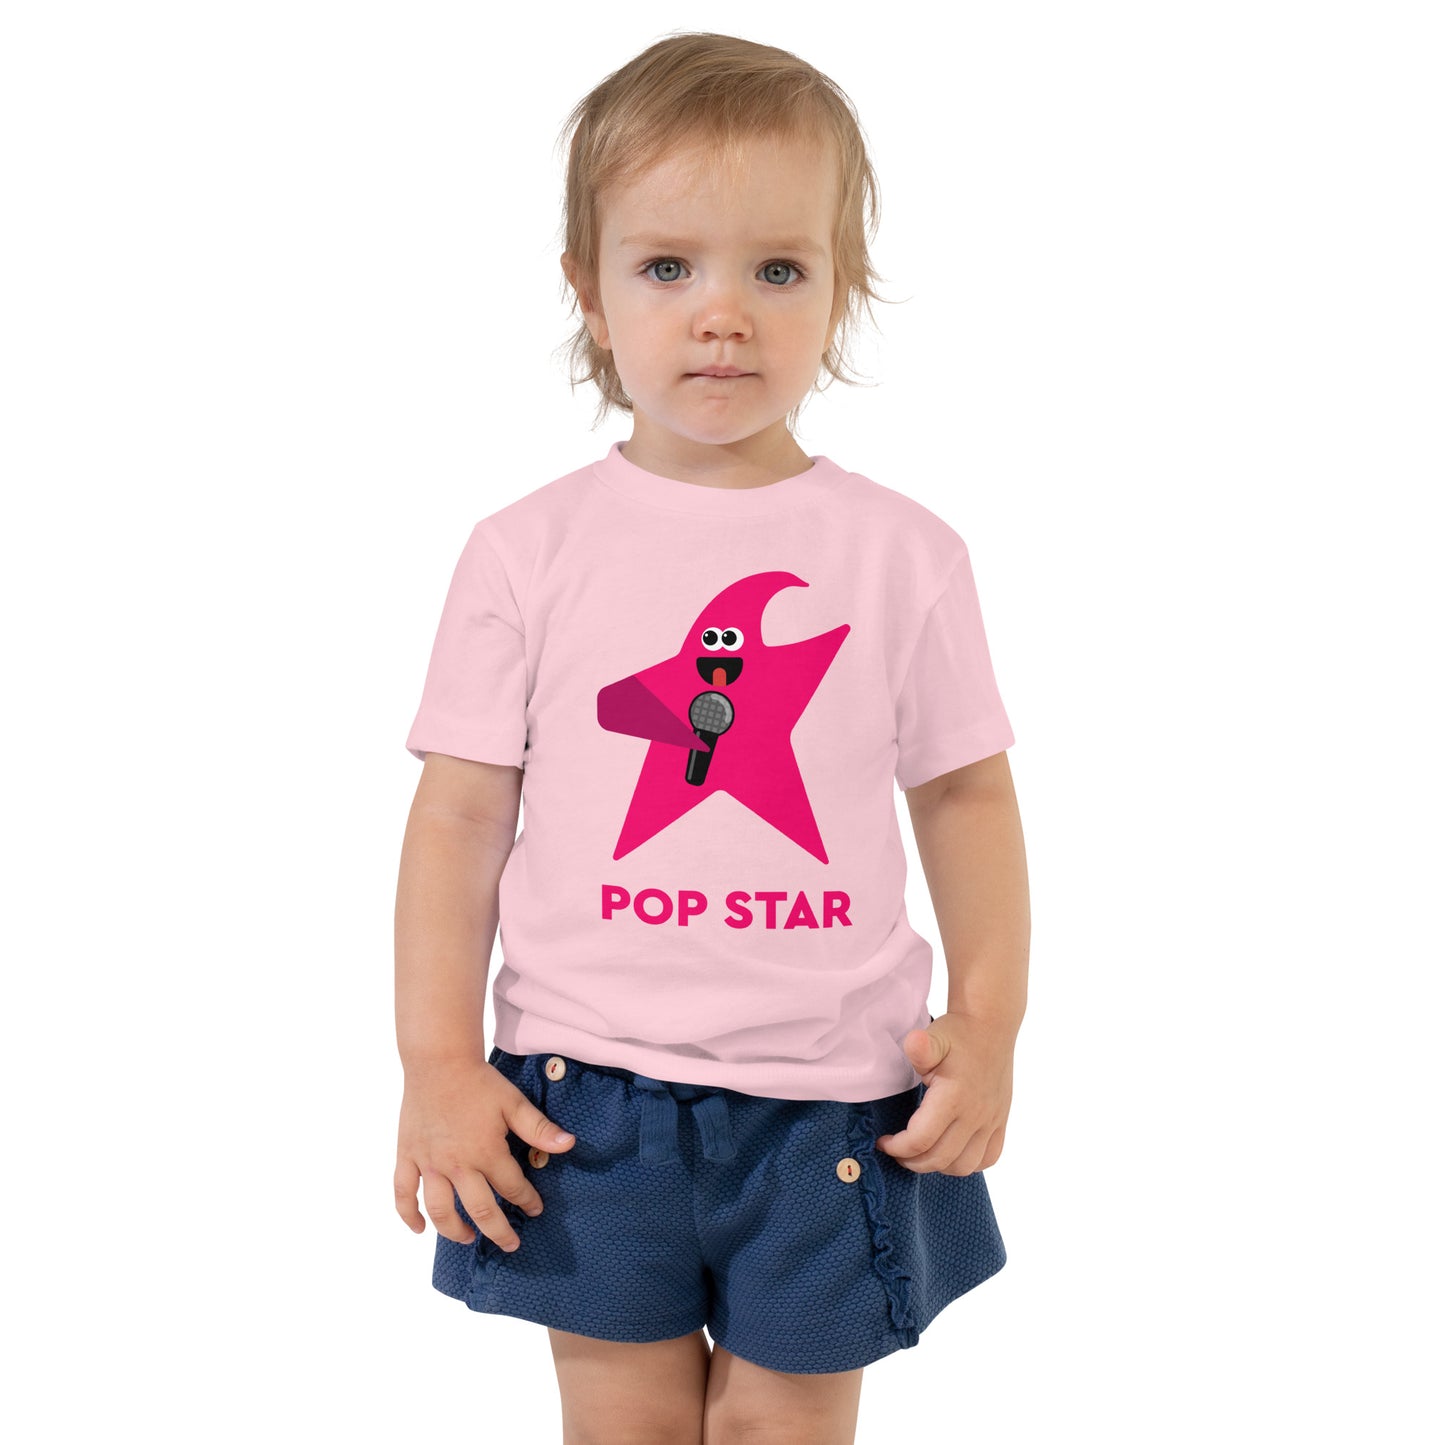 Toddler - Pop Star - Short Sleeve Tee